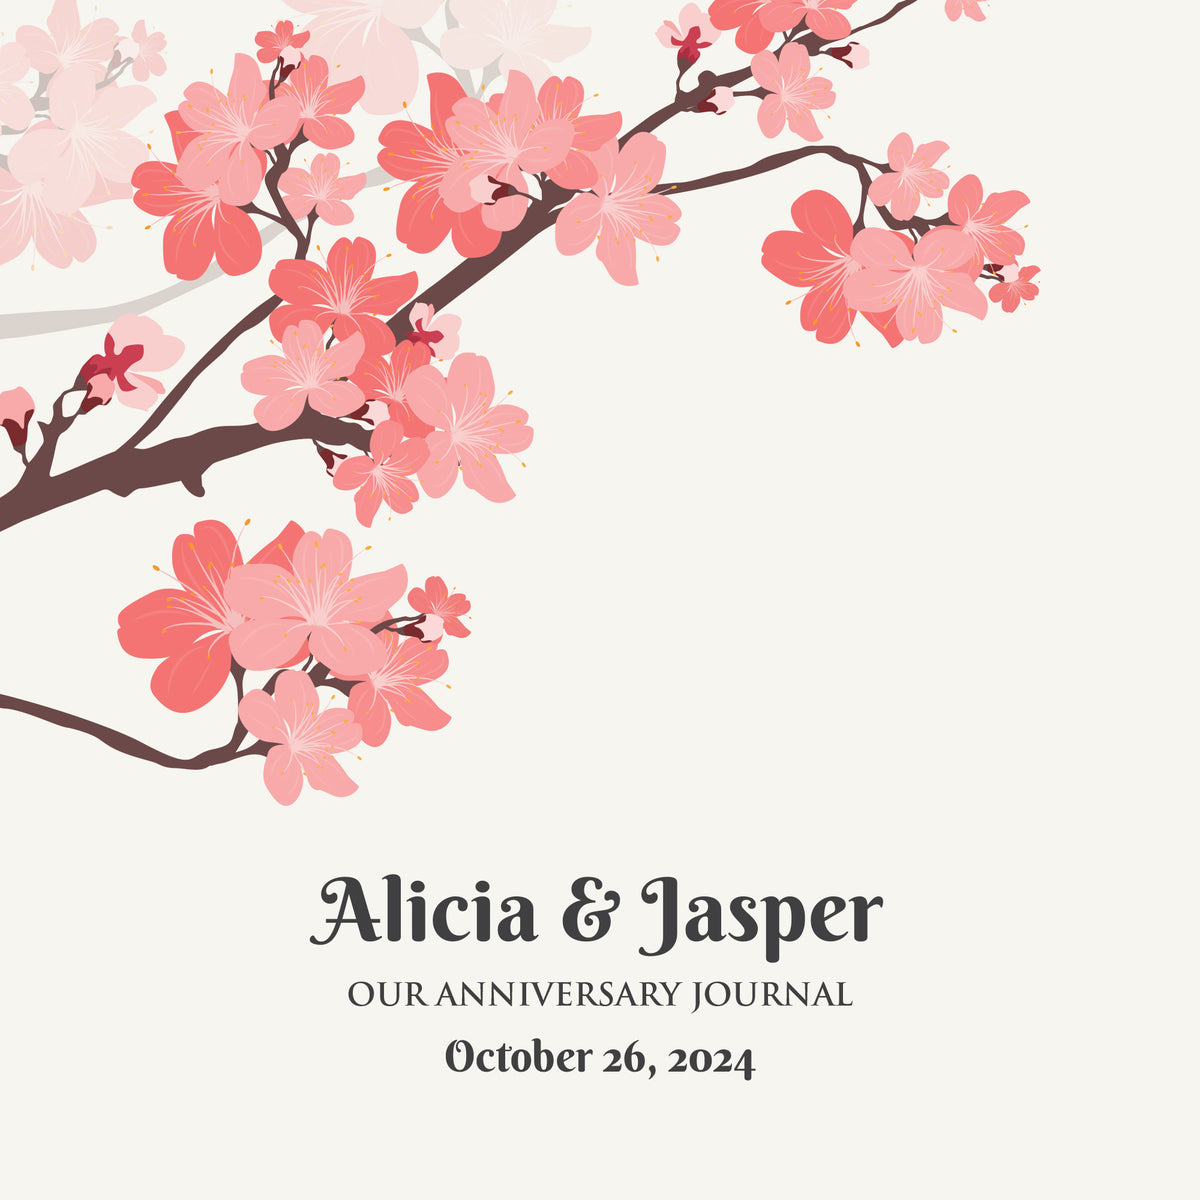 Personalized Anniversary Journal Cherry Blossom